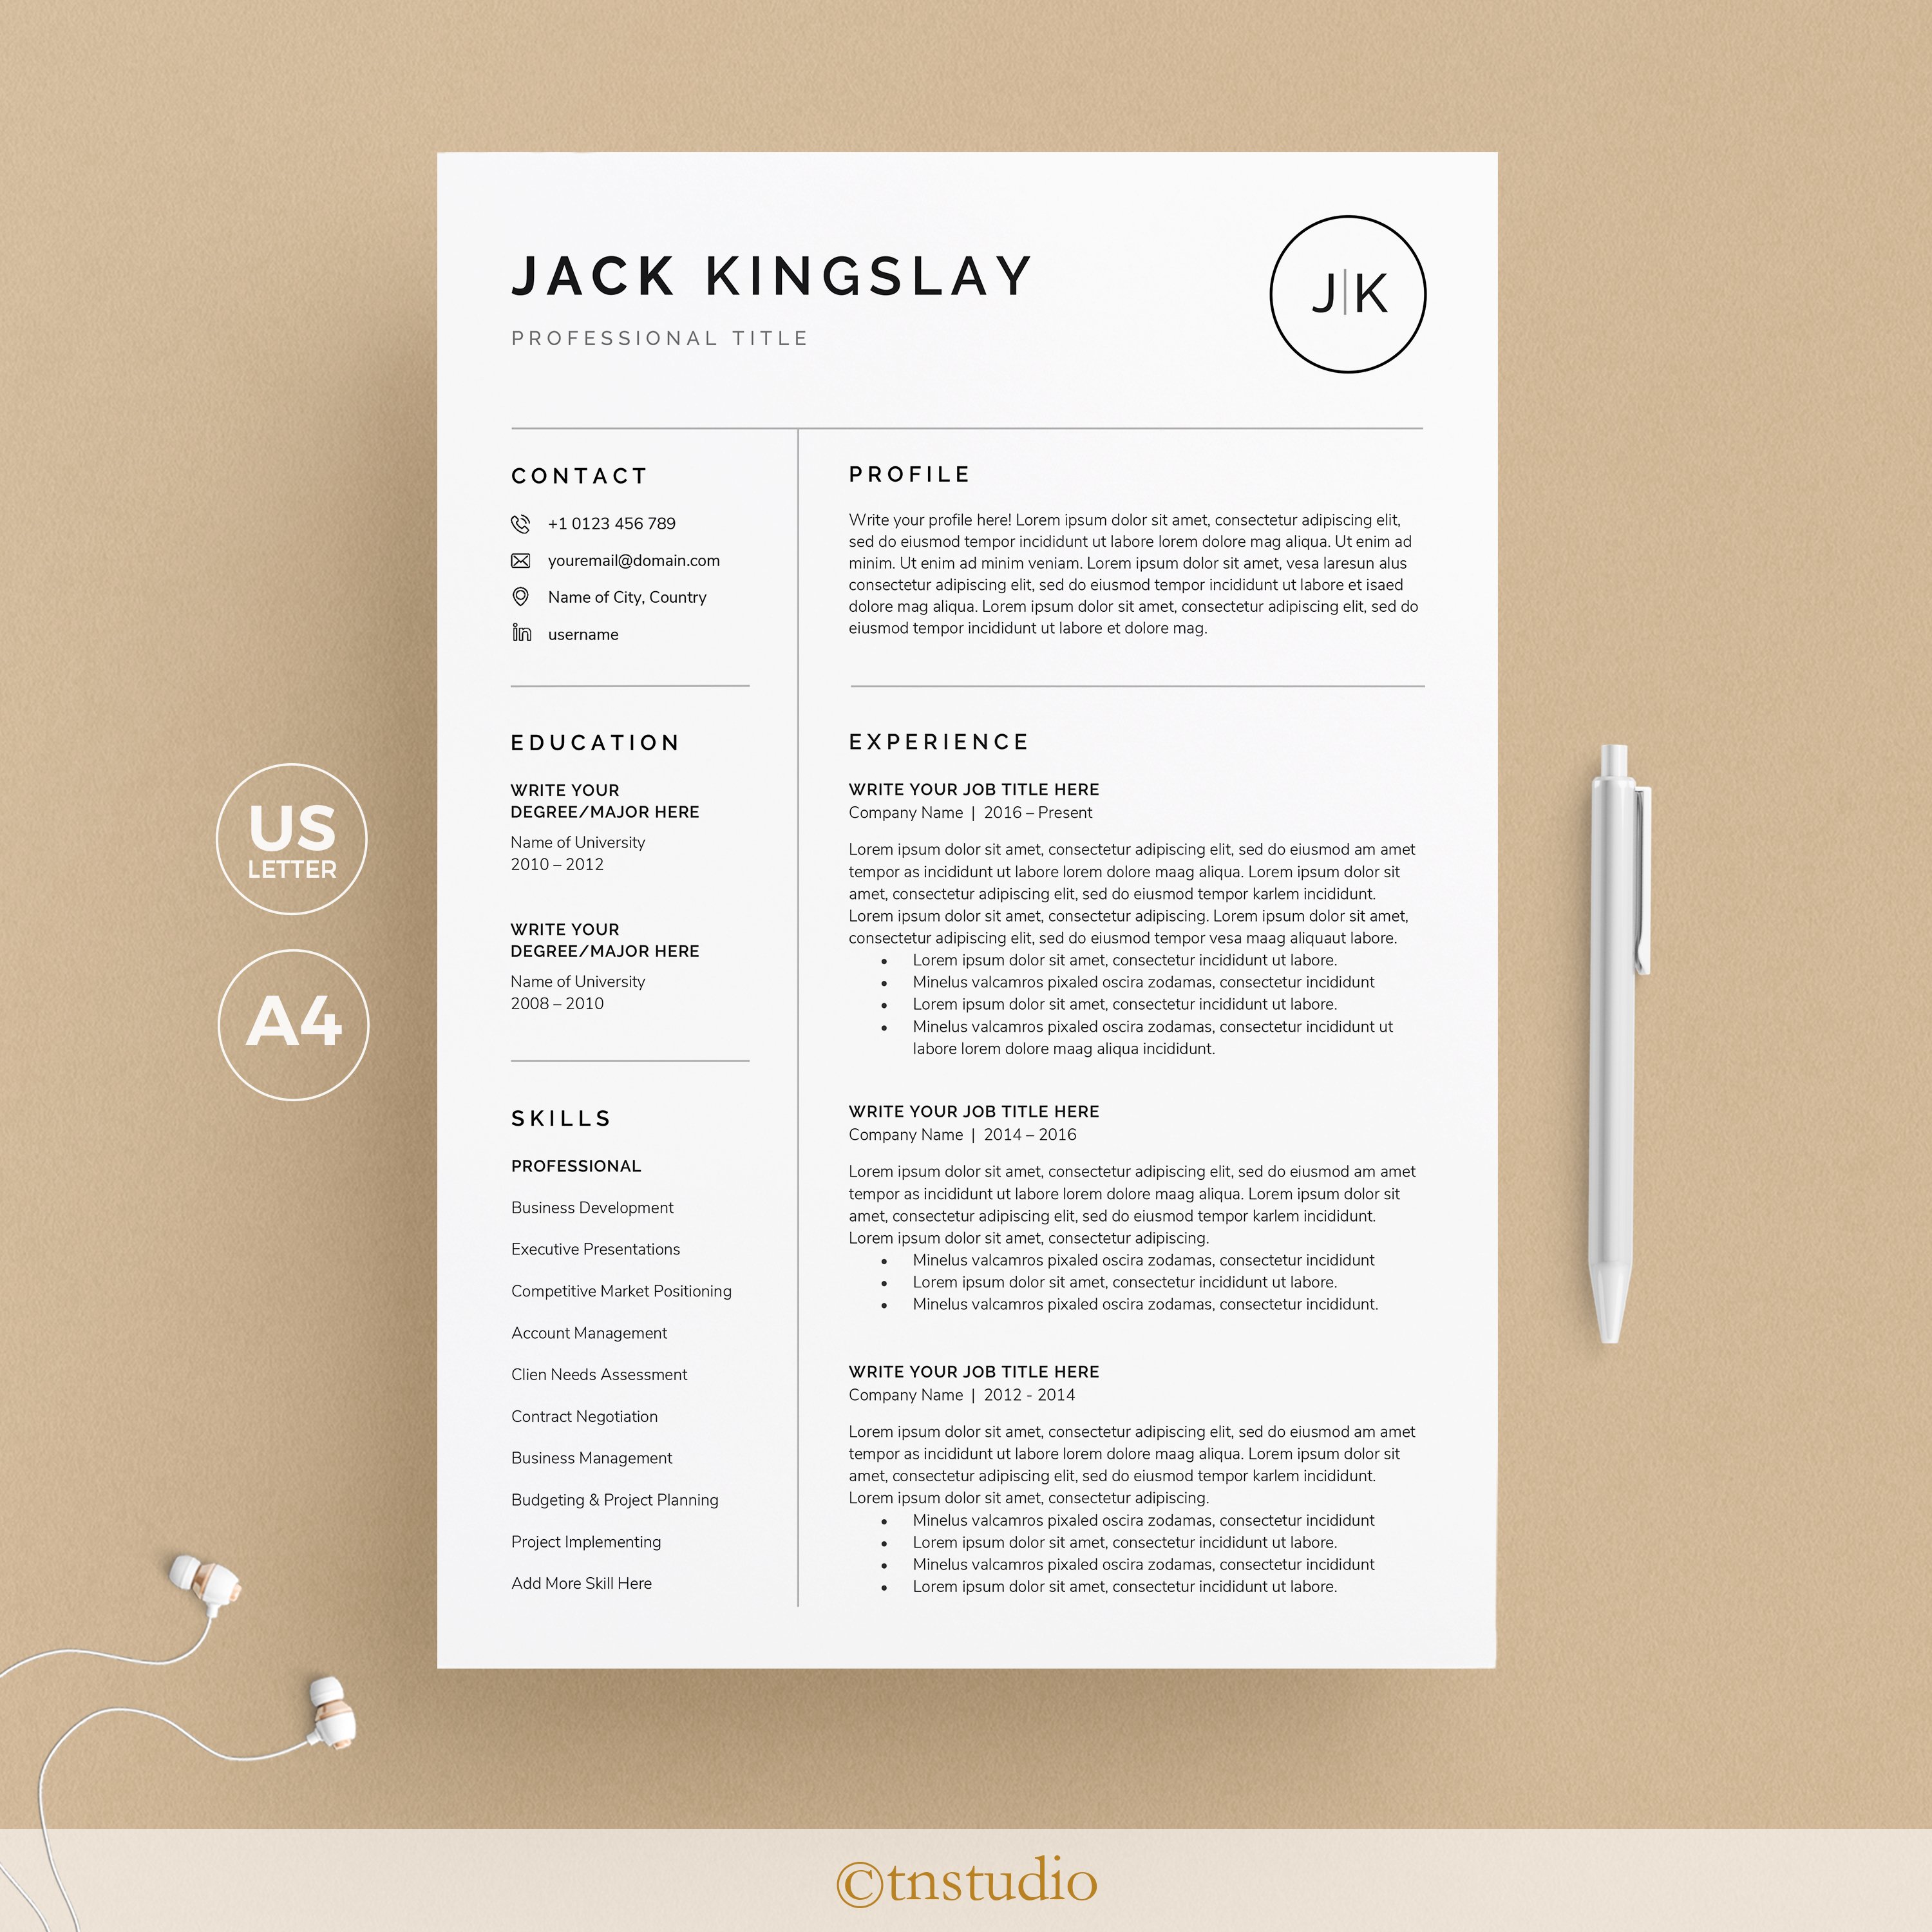 Resume/CV - JK cover image.